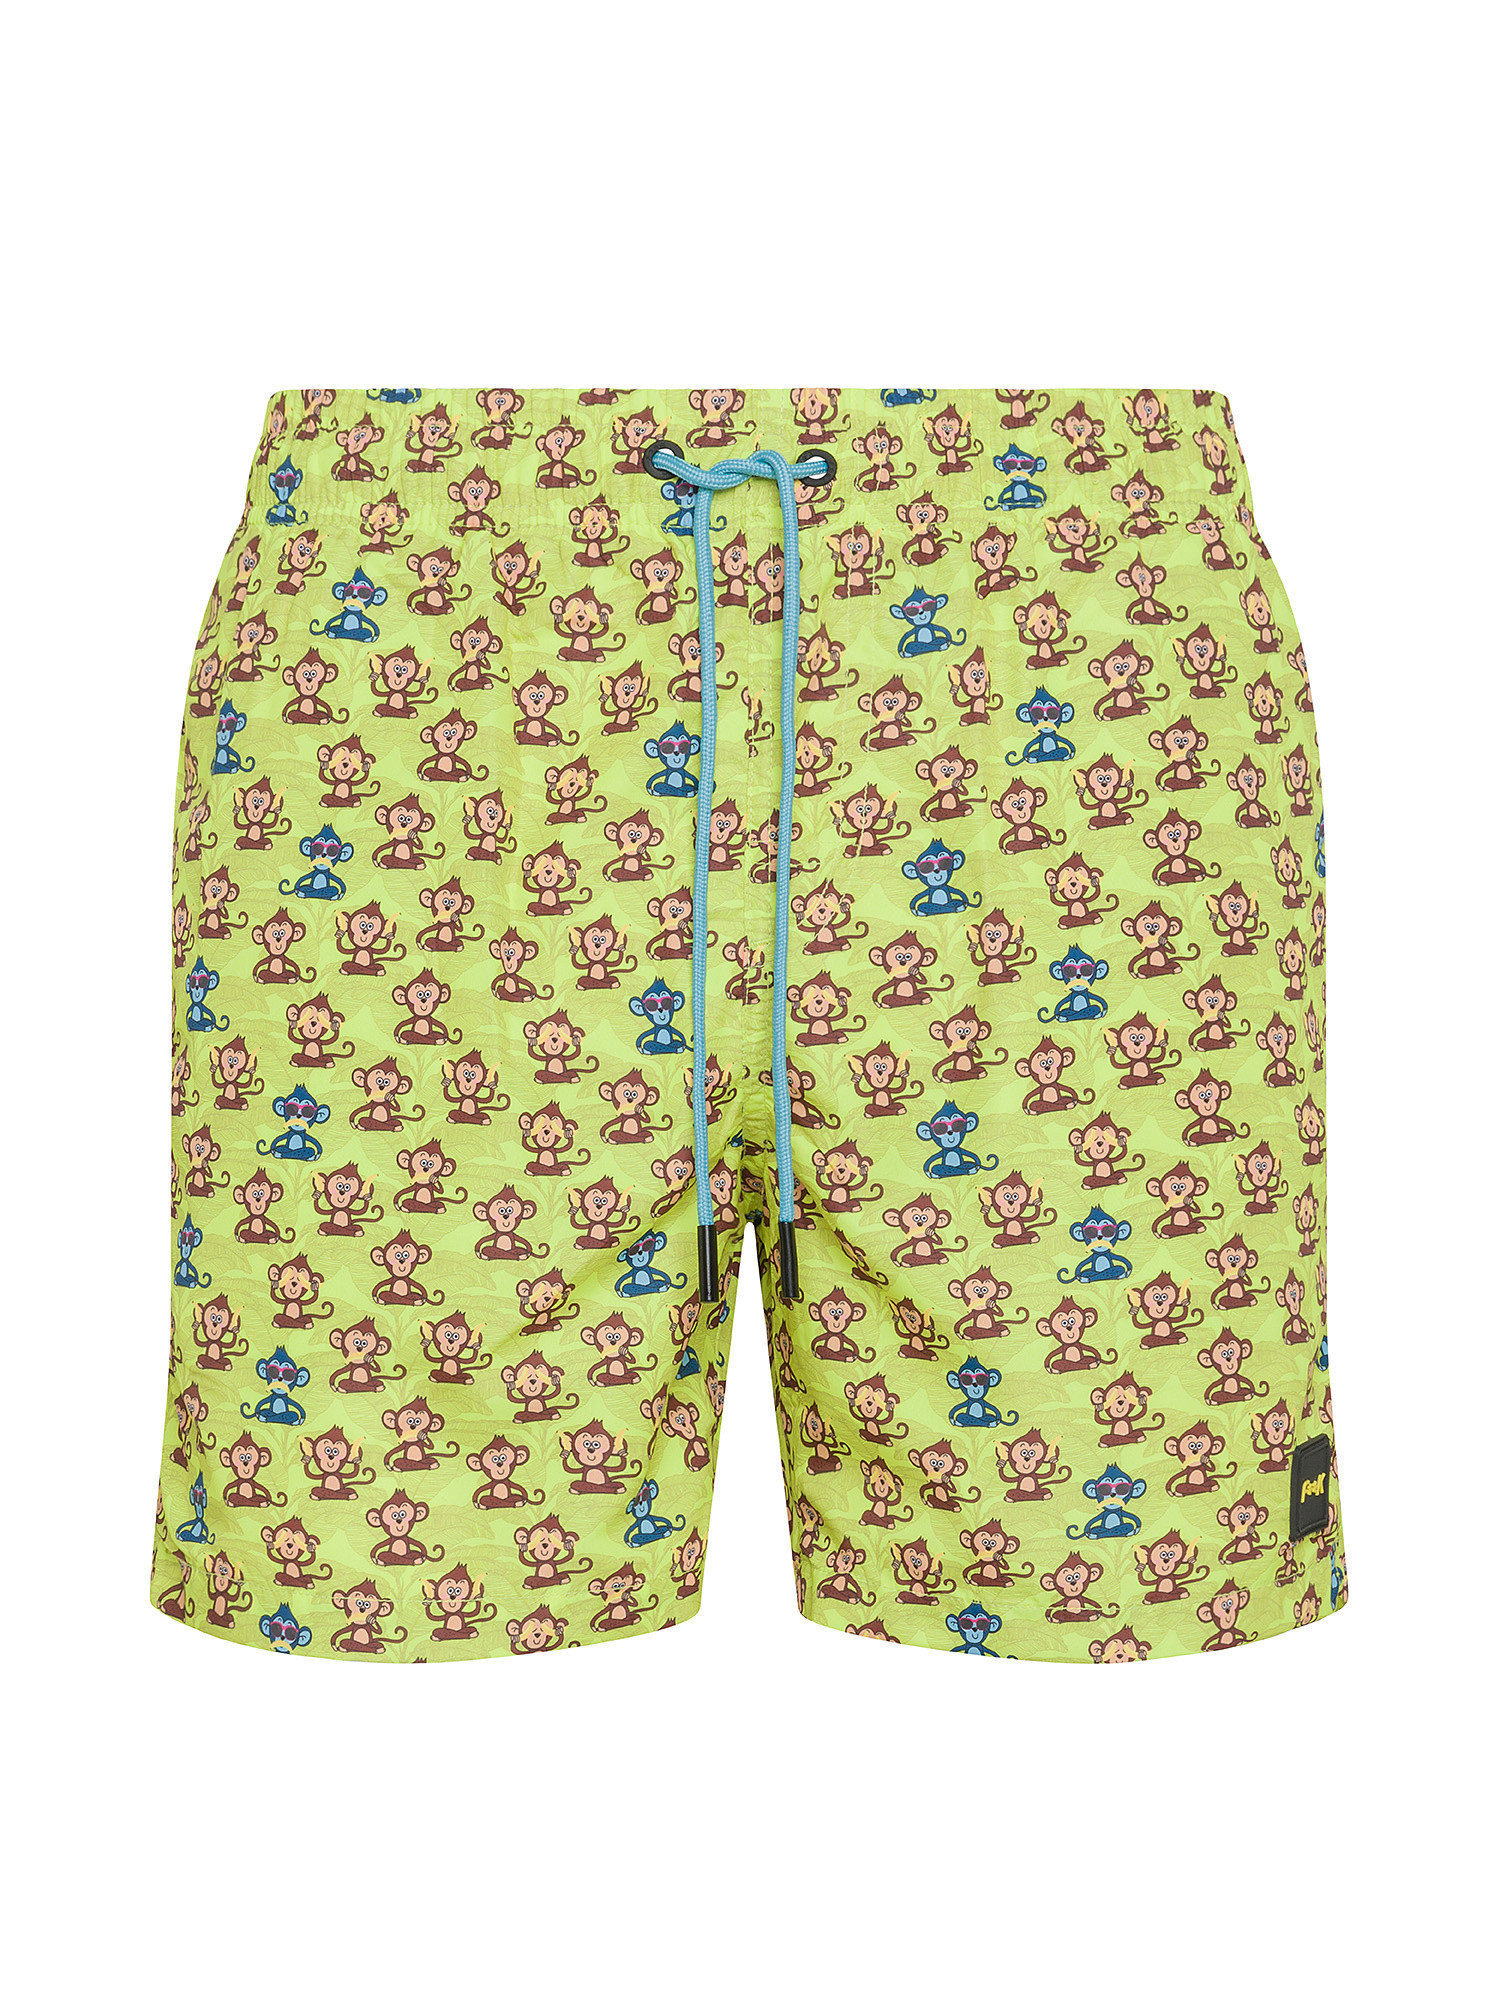 F**K - Patterned swim shorts, Yellow, large image number 0